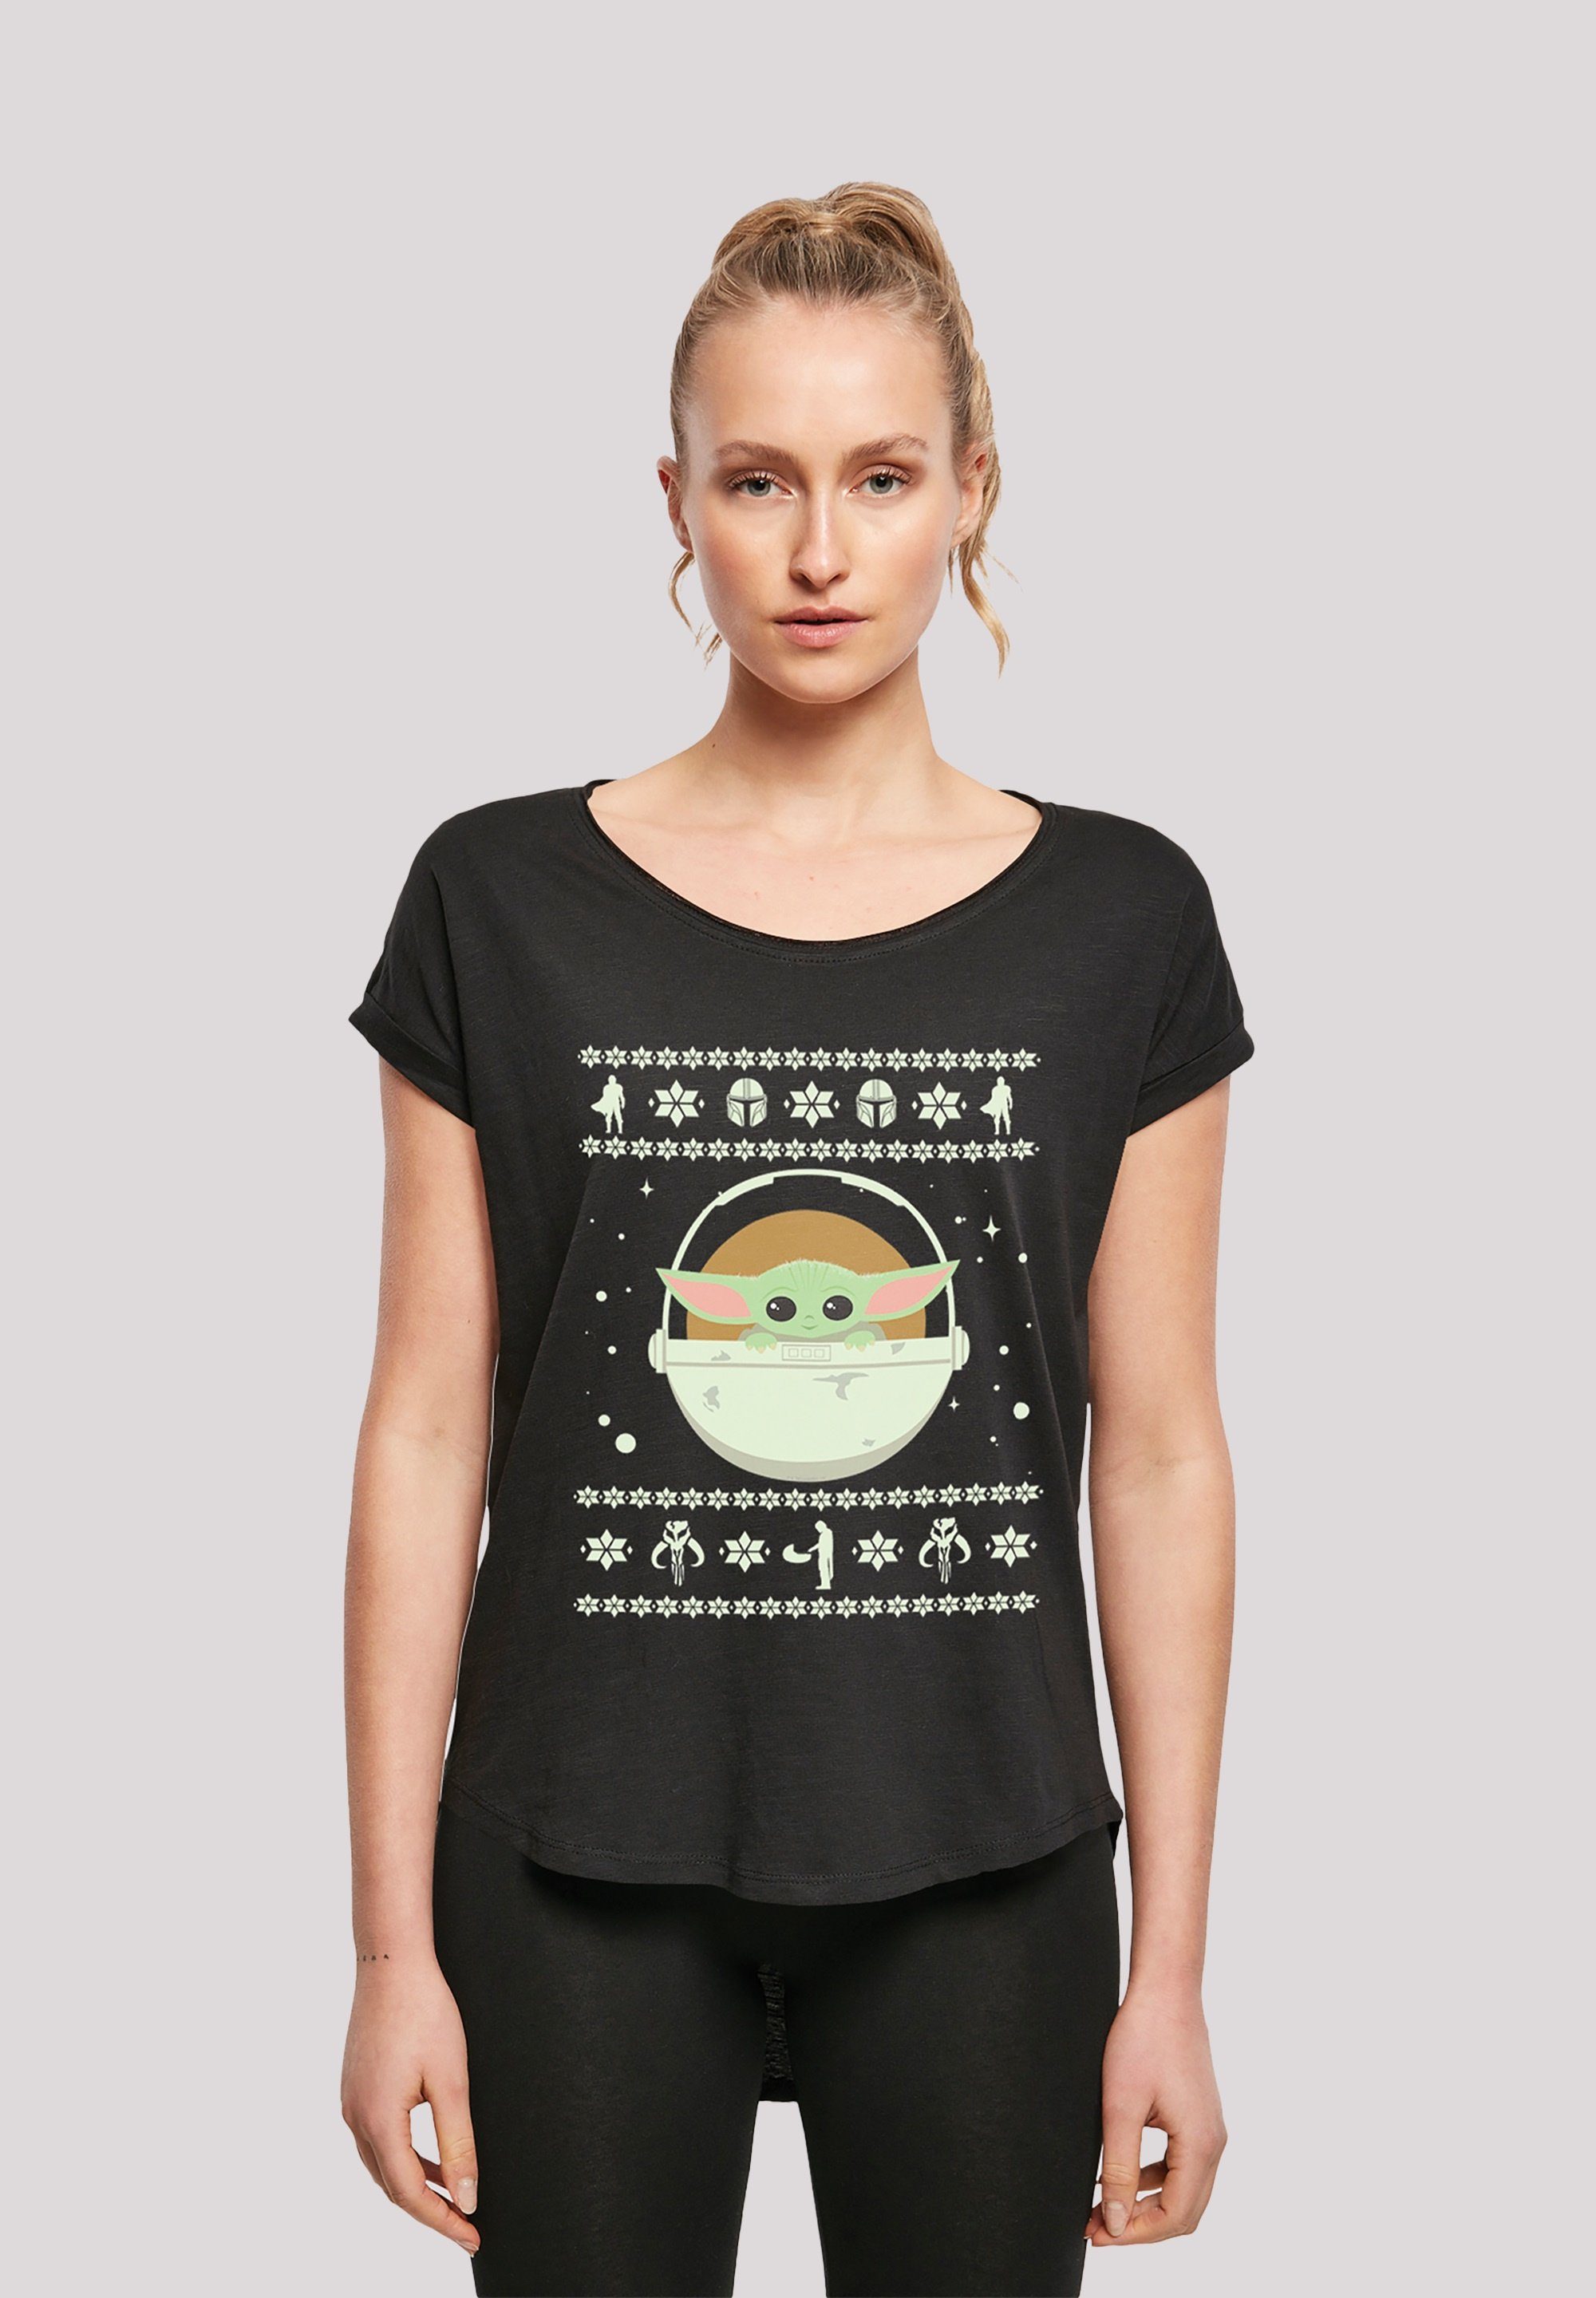 F4NT4STIC T-Shirt Star Wars Yoda Baby The Print Mandalorian